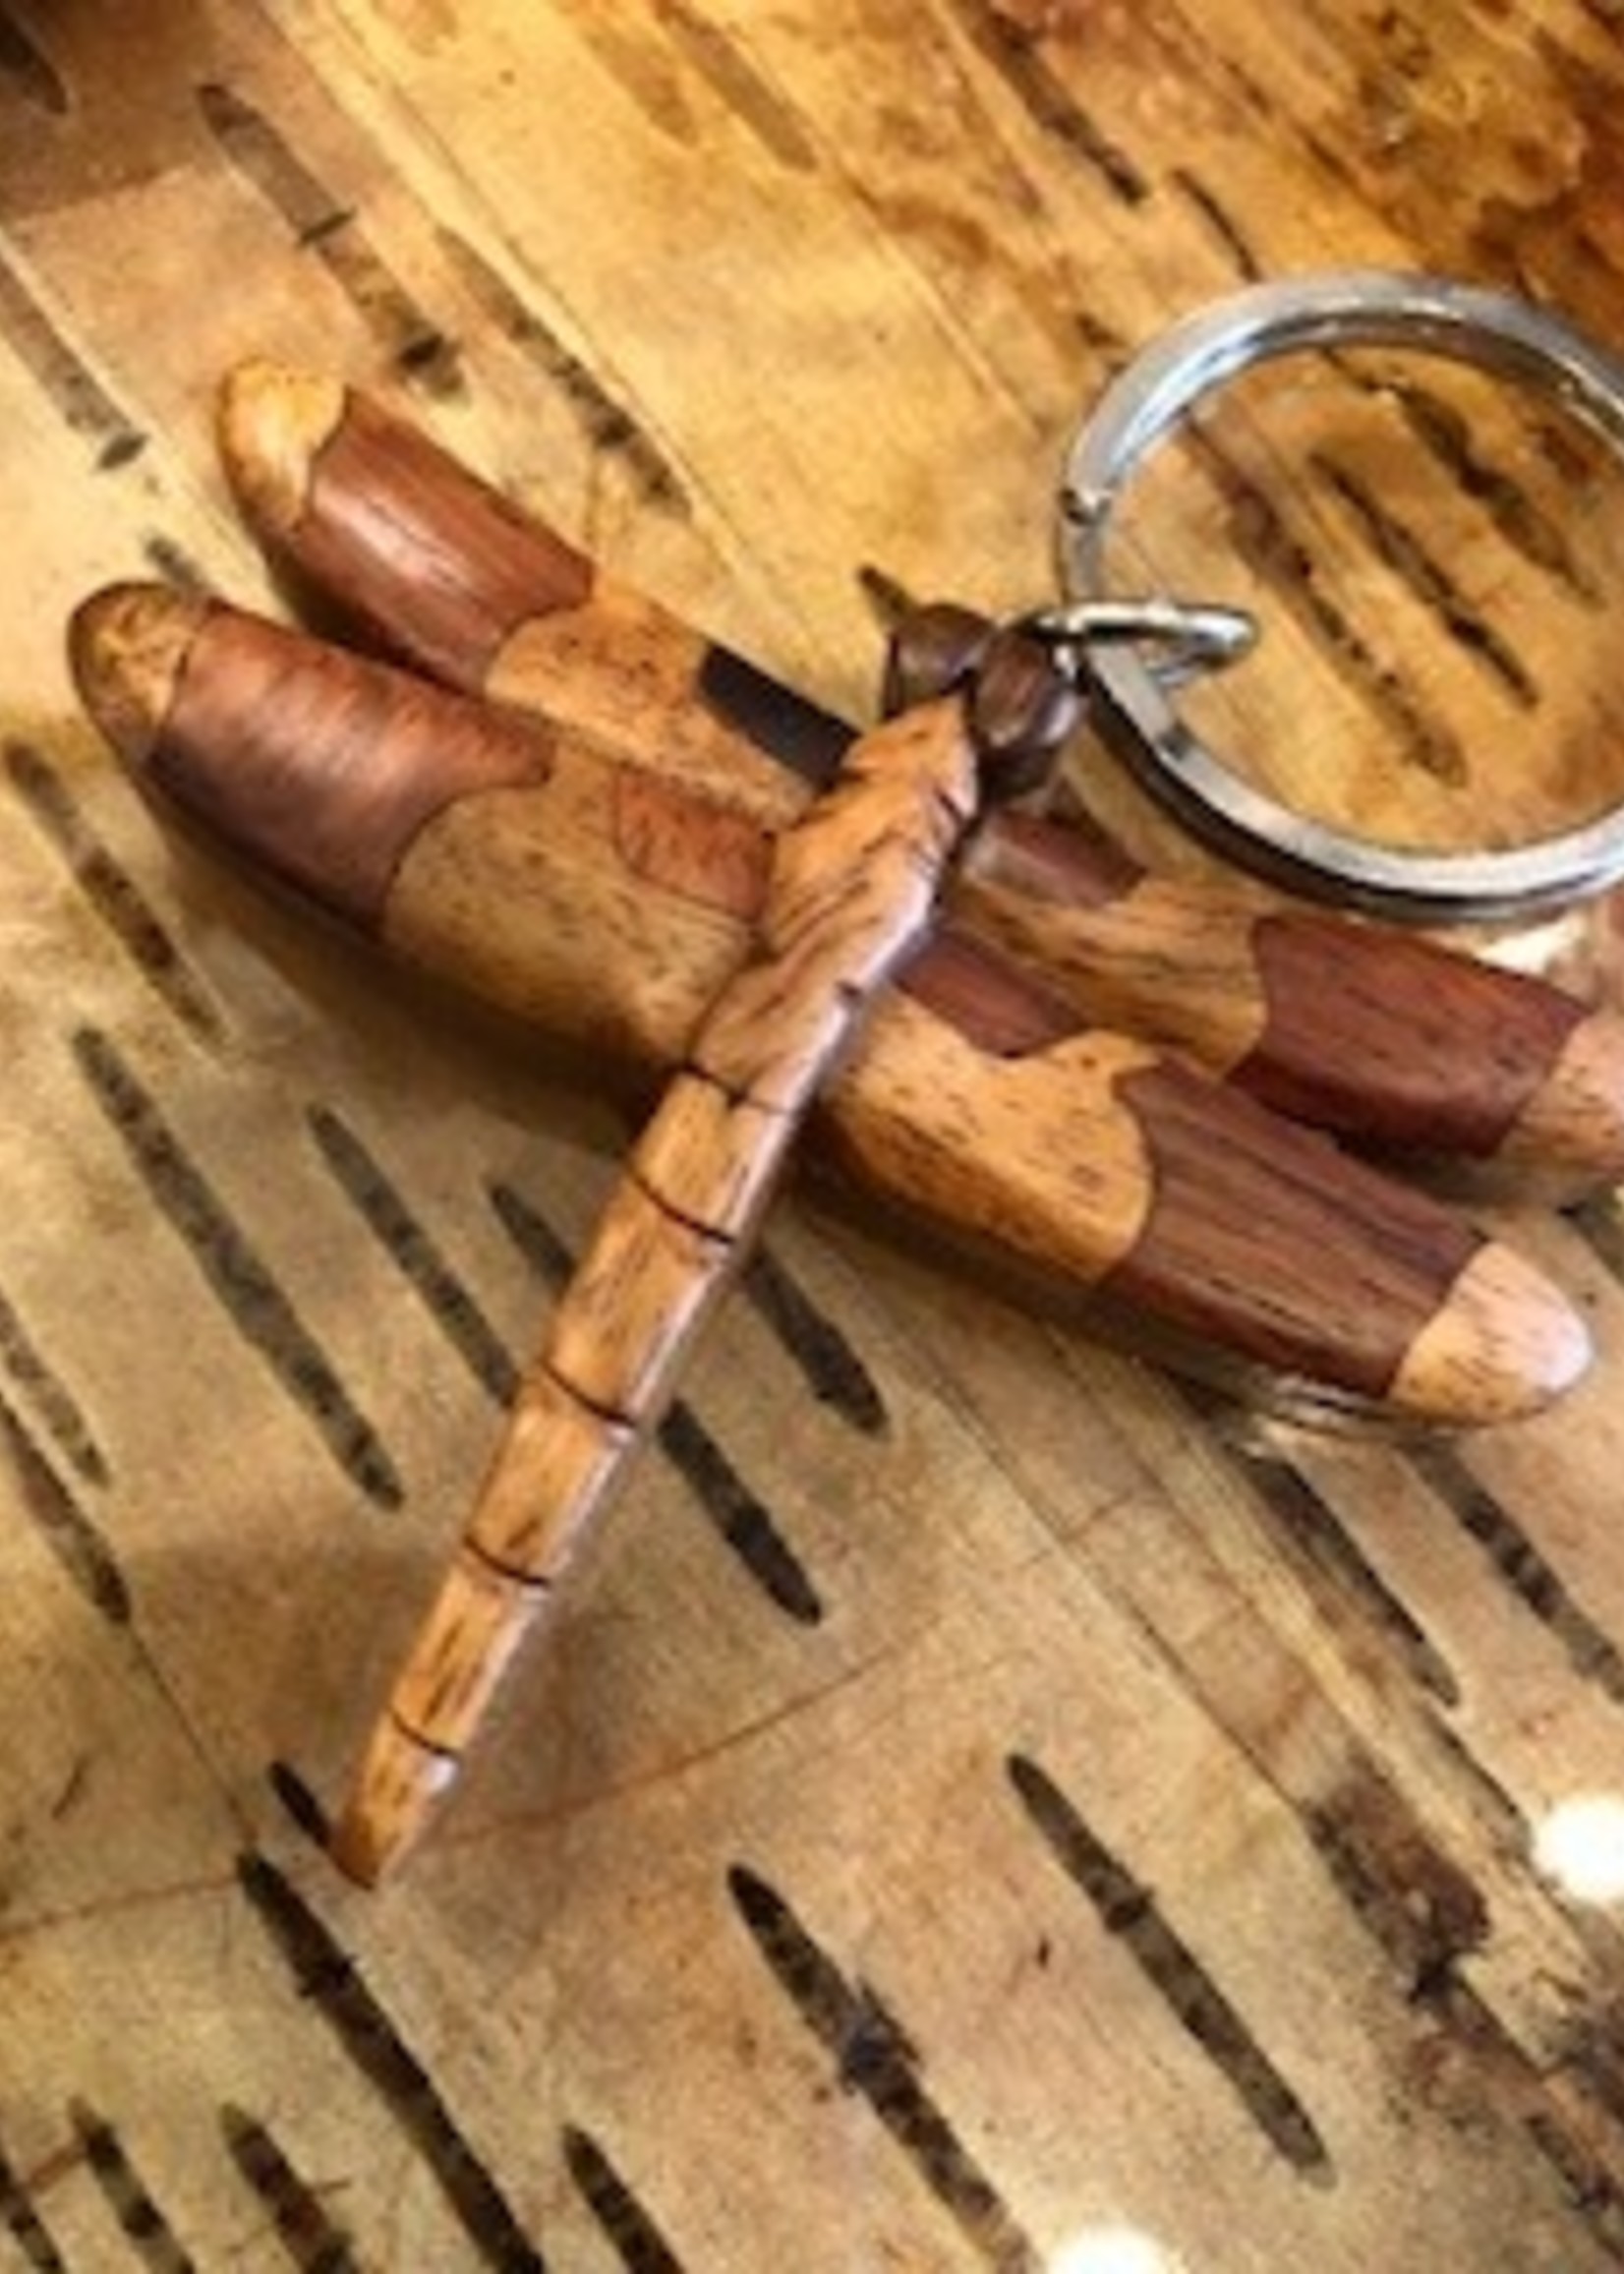 Wooden Dragonfly Keychain